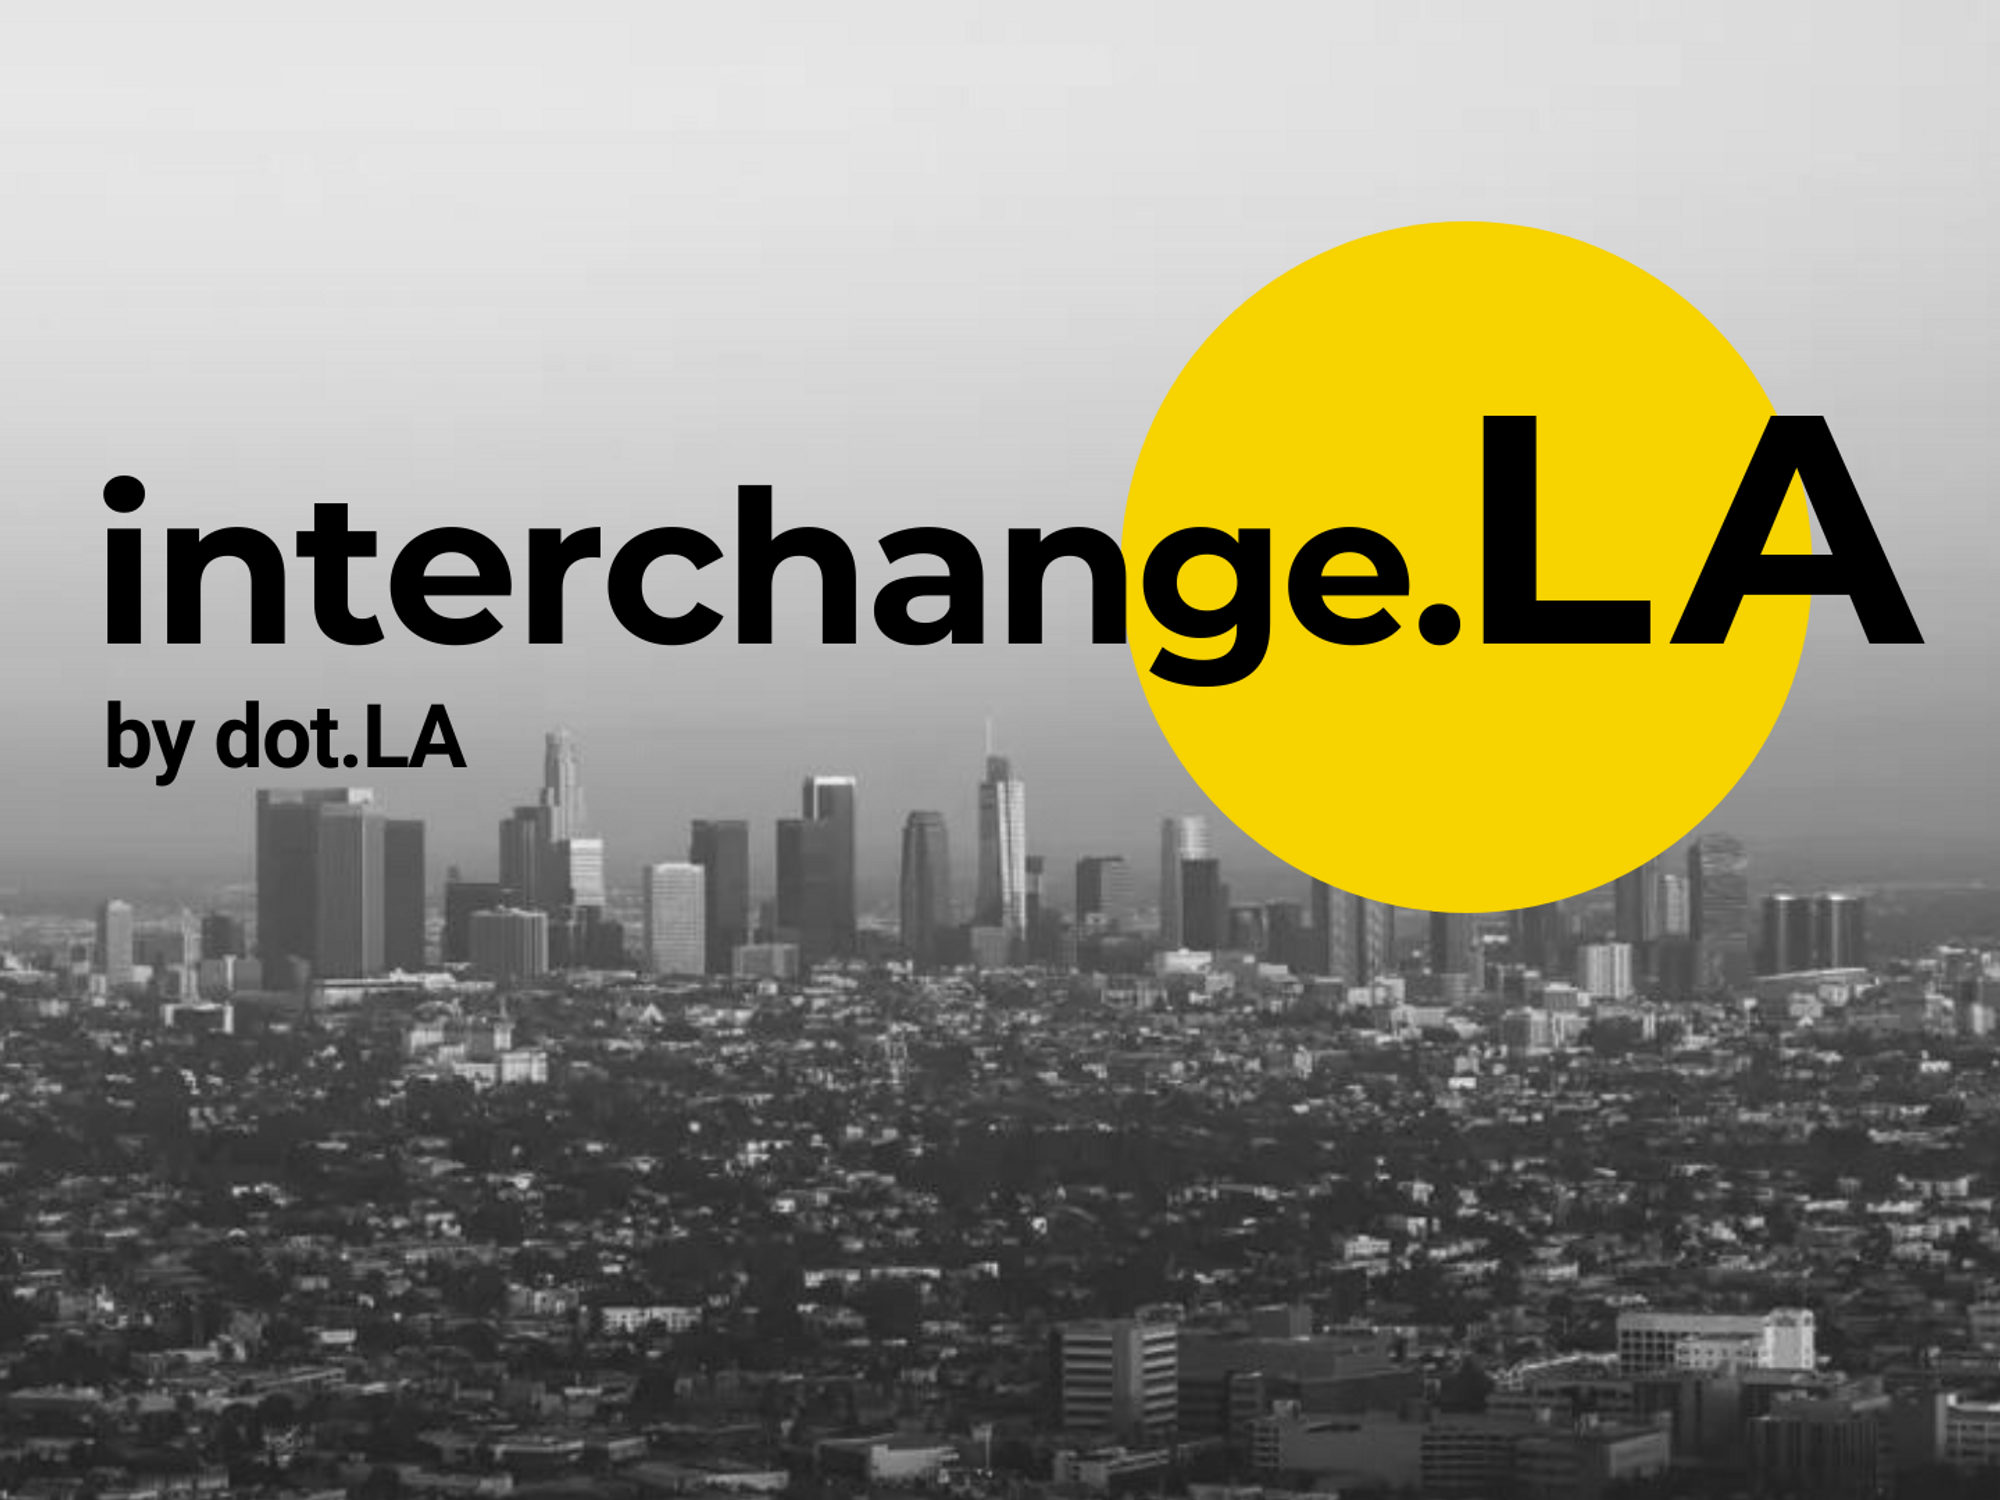 Introducing dot.LA's Interchange.LA Jobs Platform